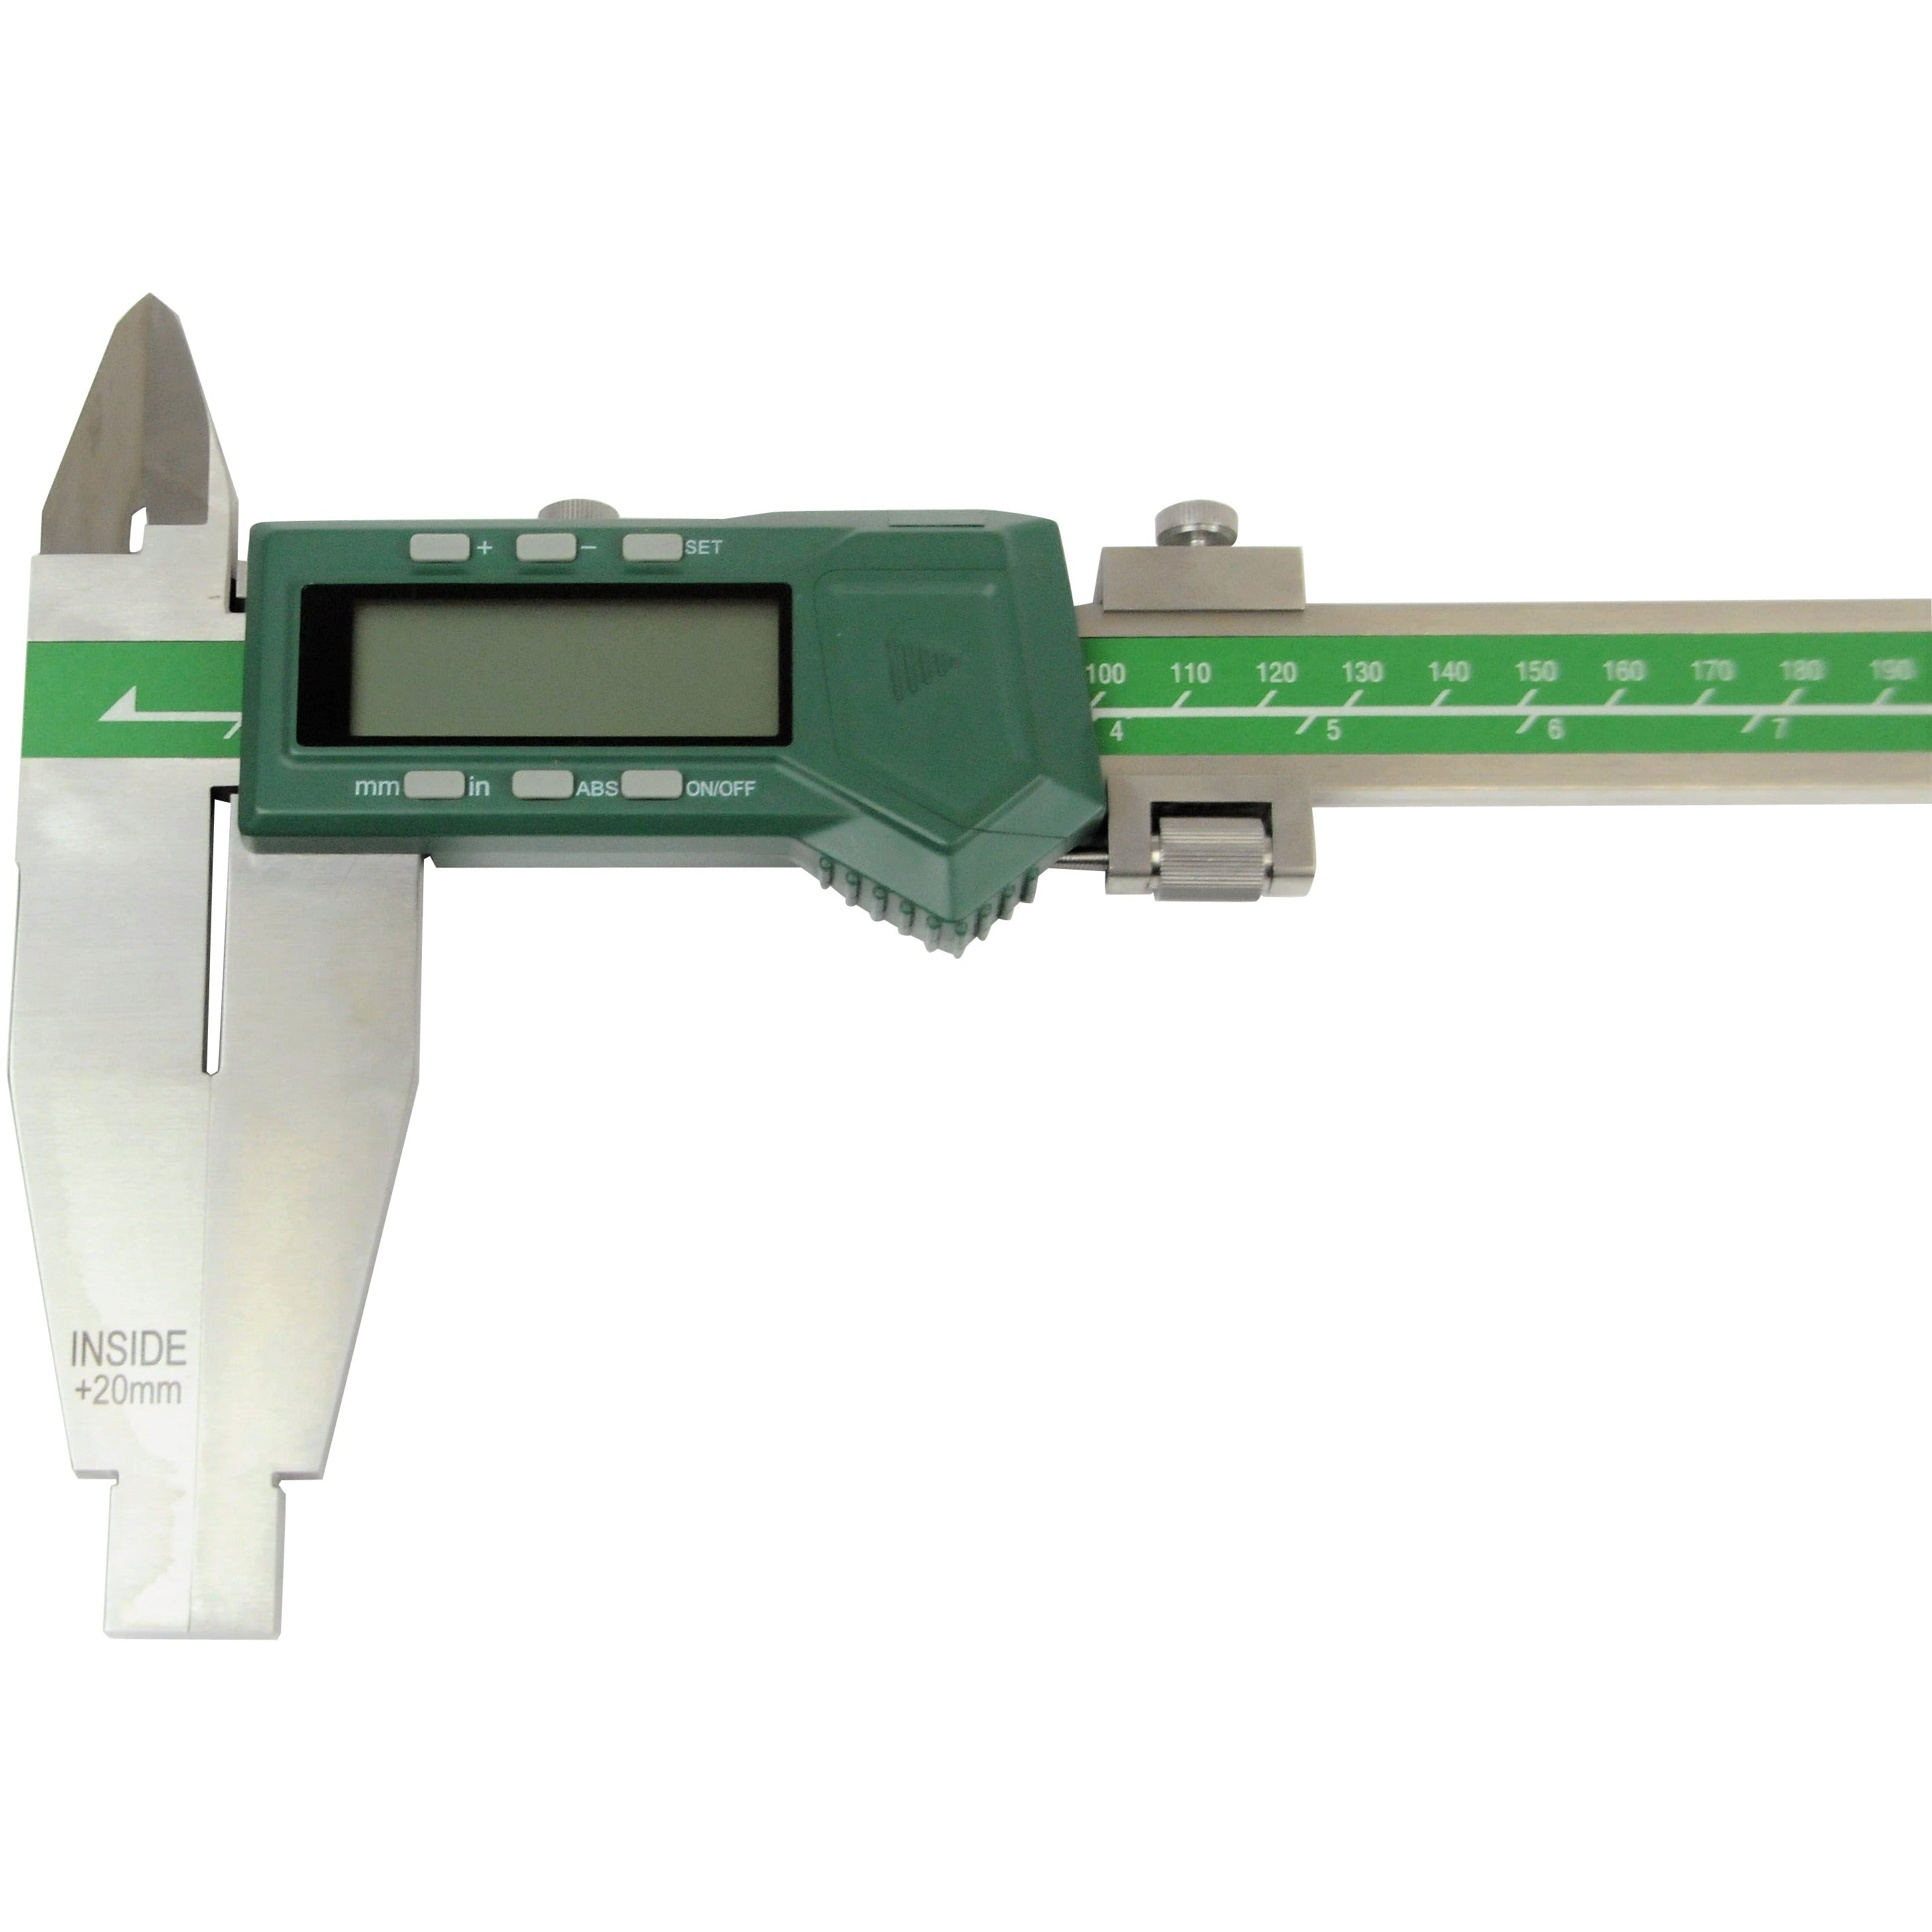 Insize Digital Caliper  0-600mm / 0-24" Range Series 1136-601